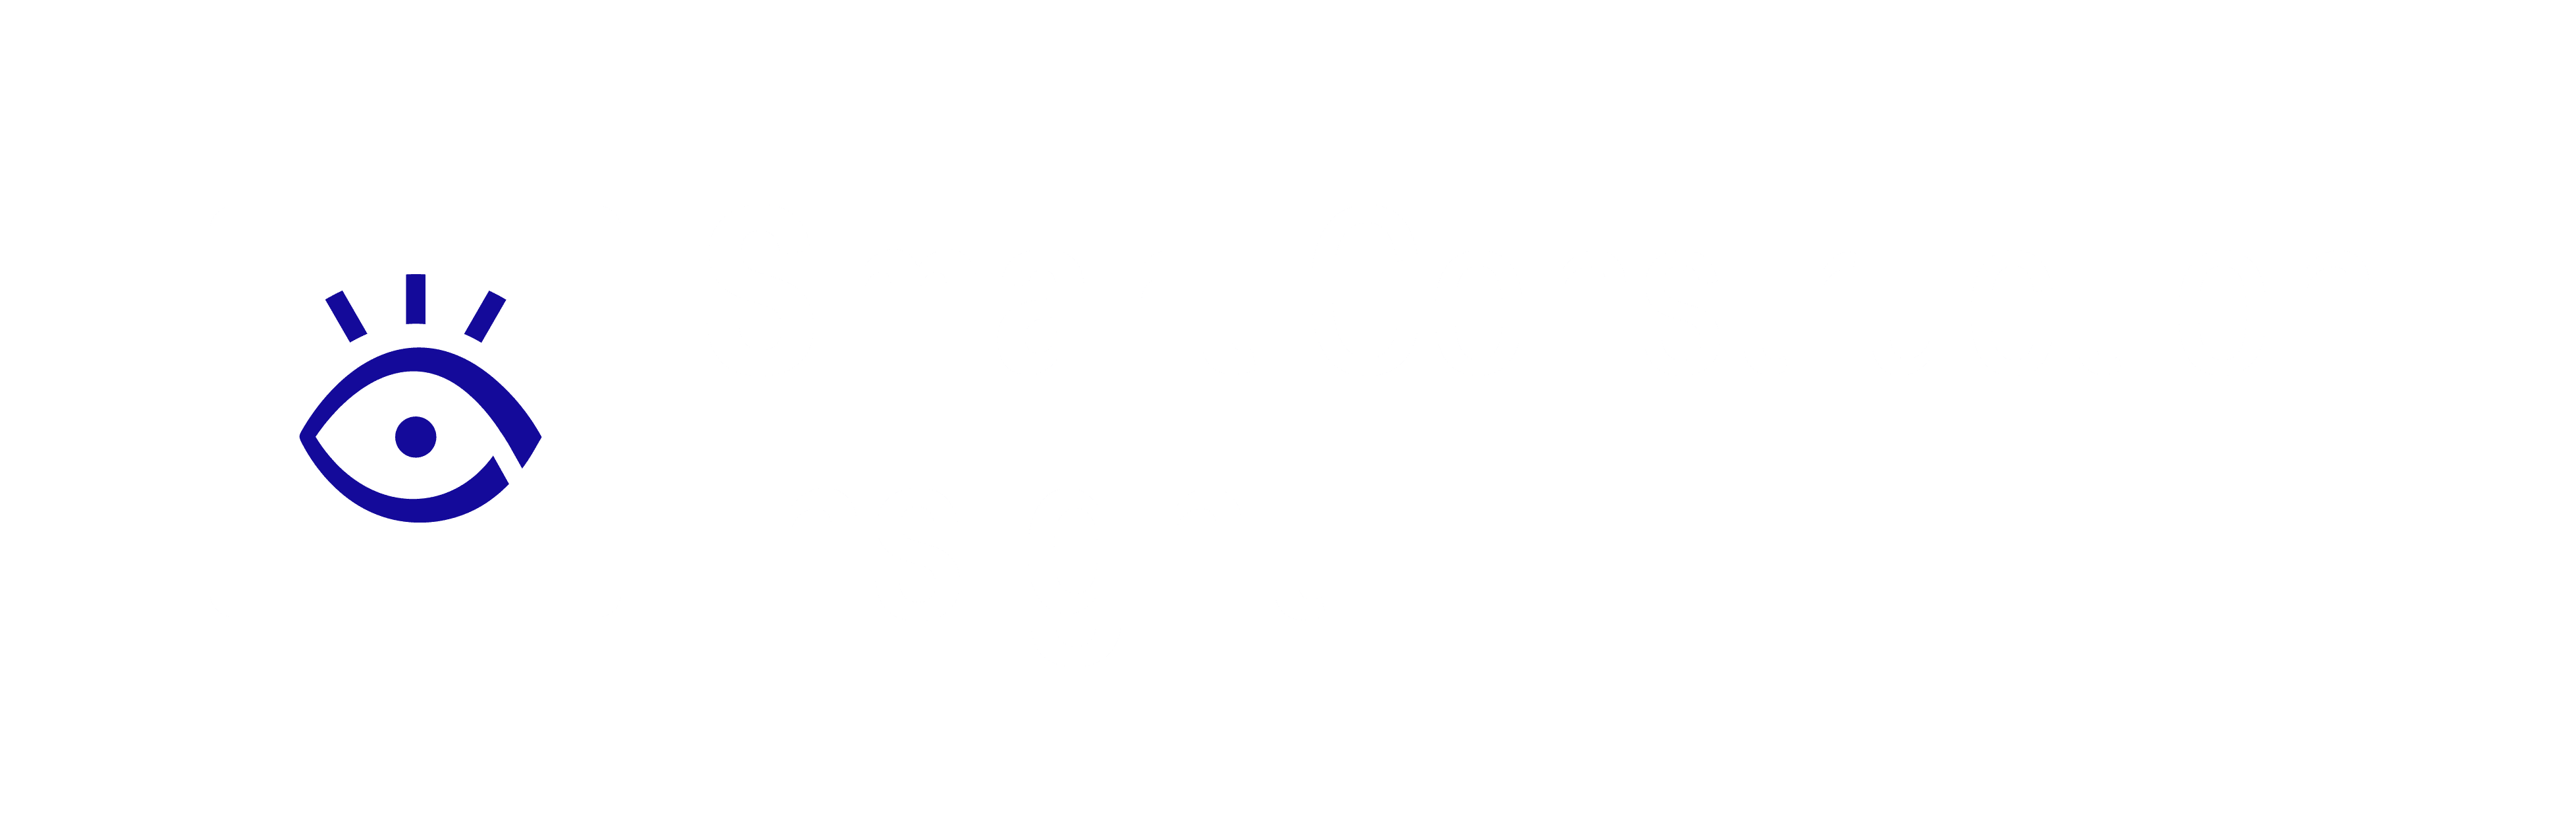 Smart Construction Insight